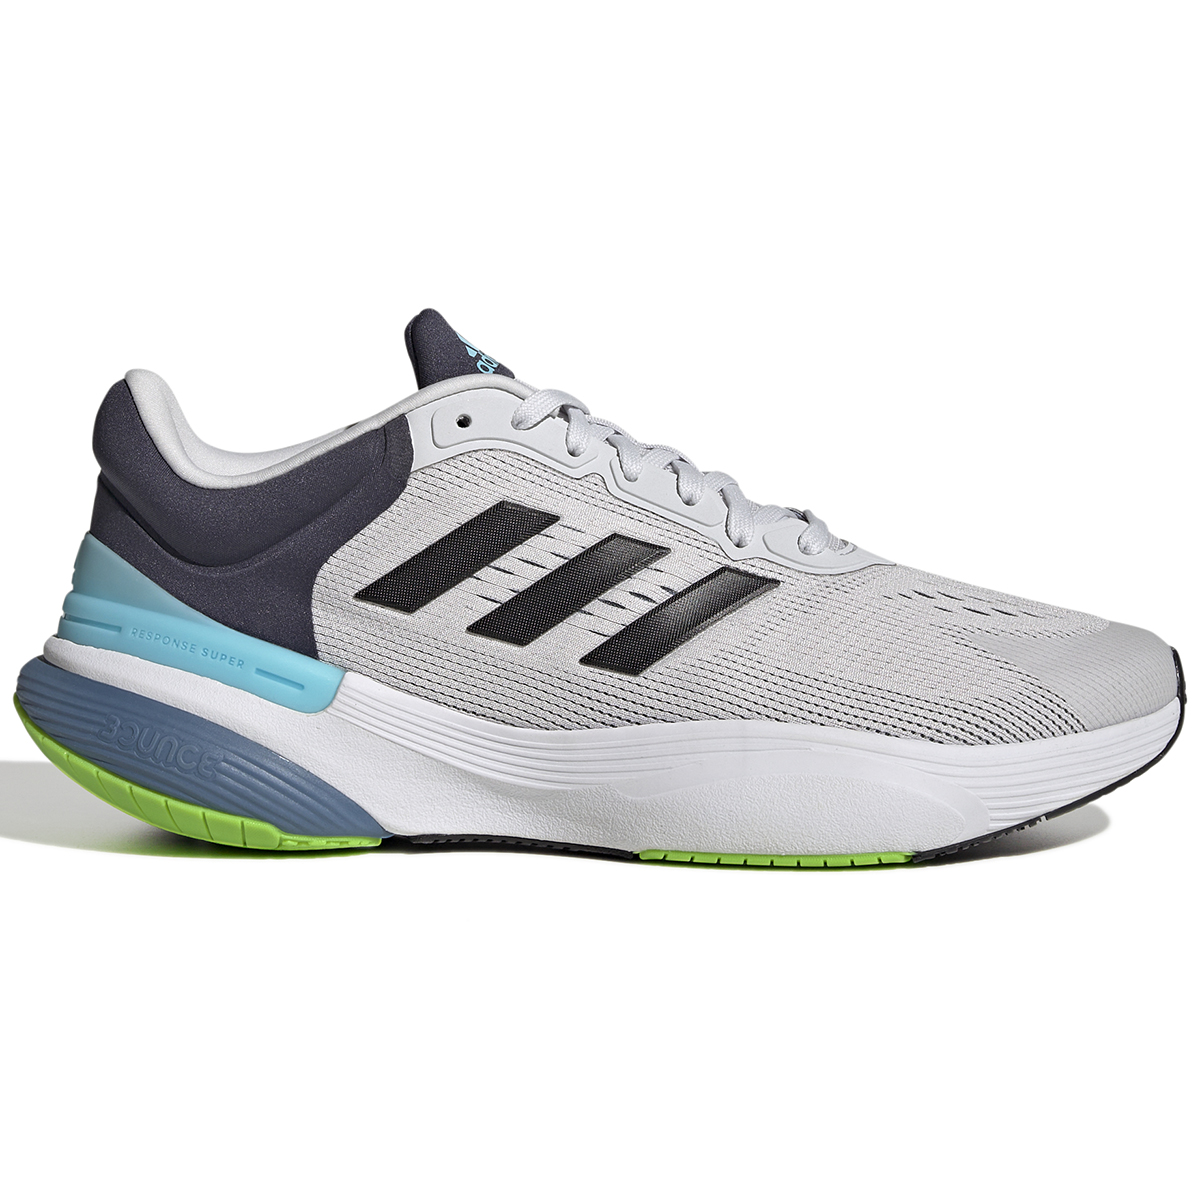 Adidas Men's Response Super 3.0 Running Shoes